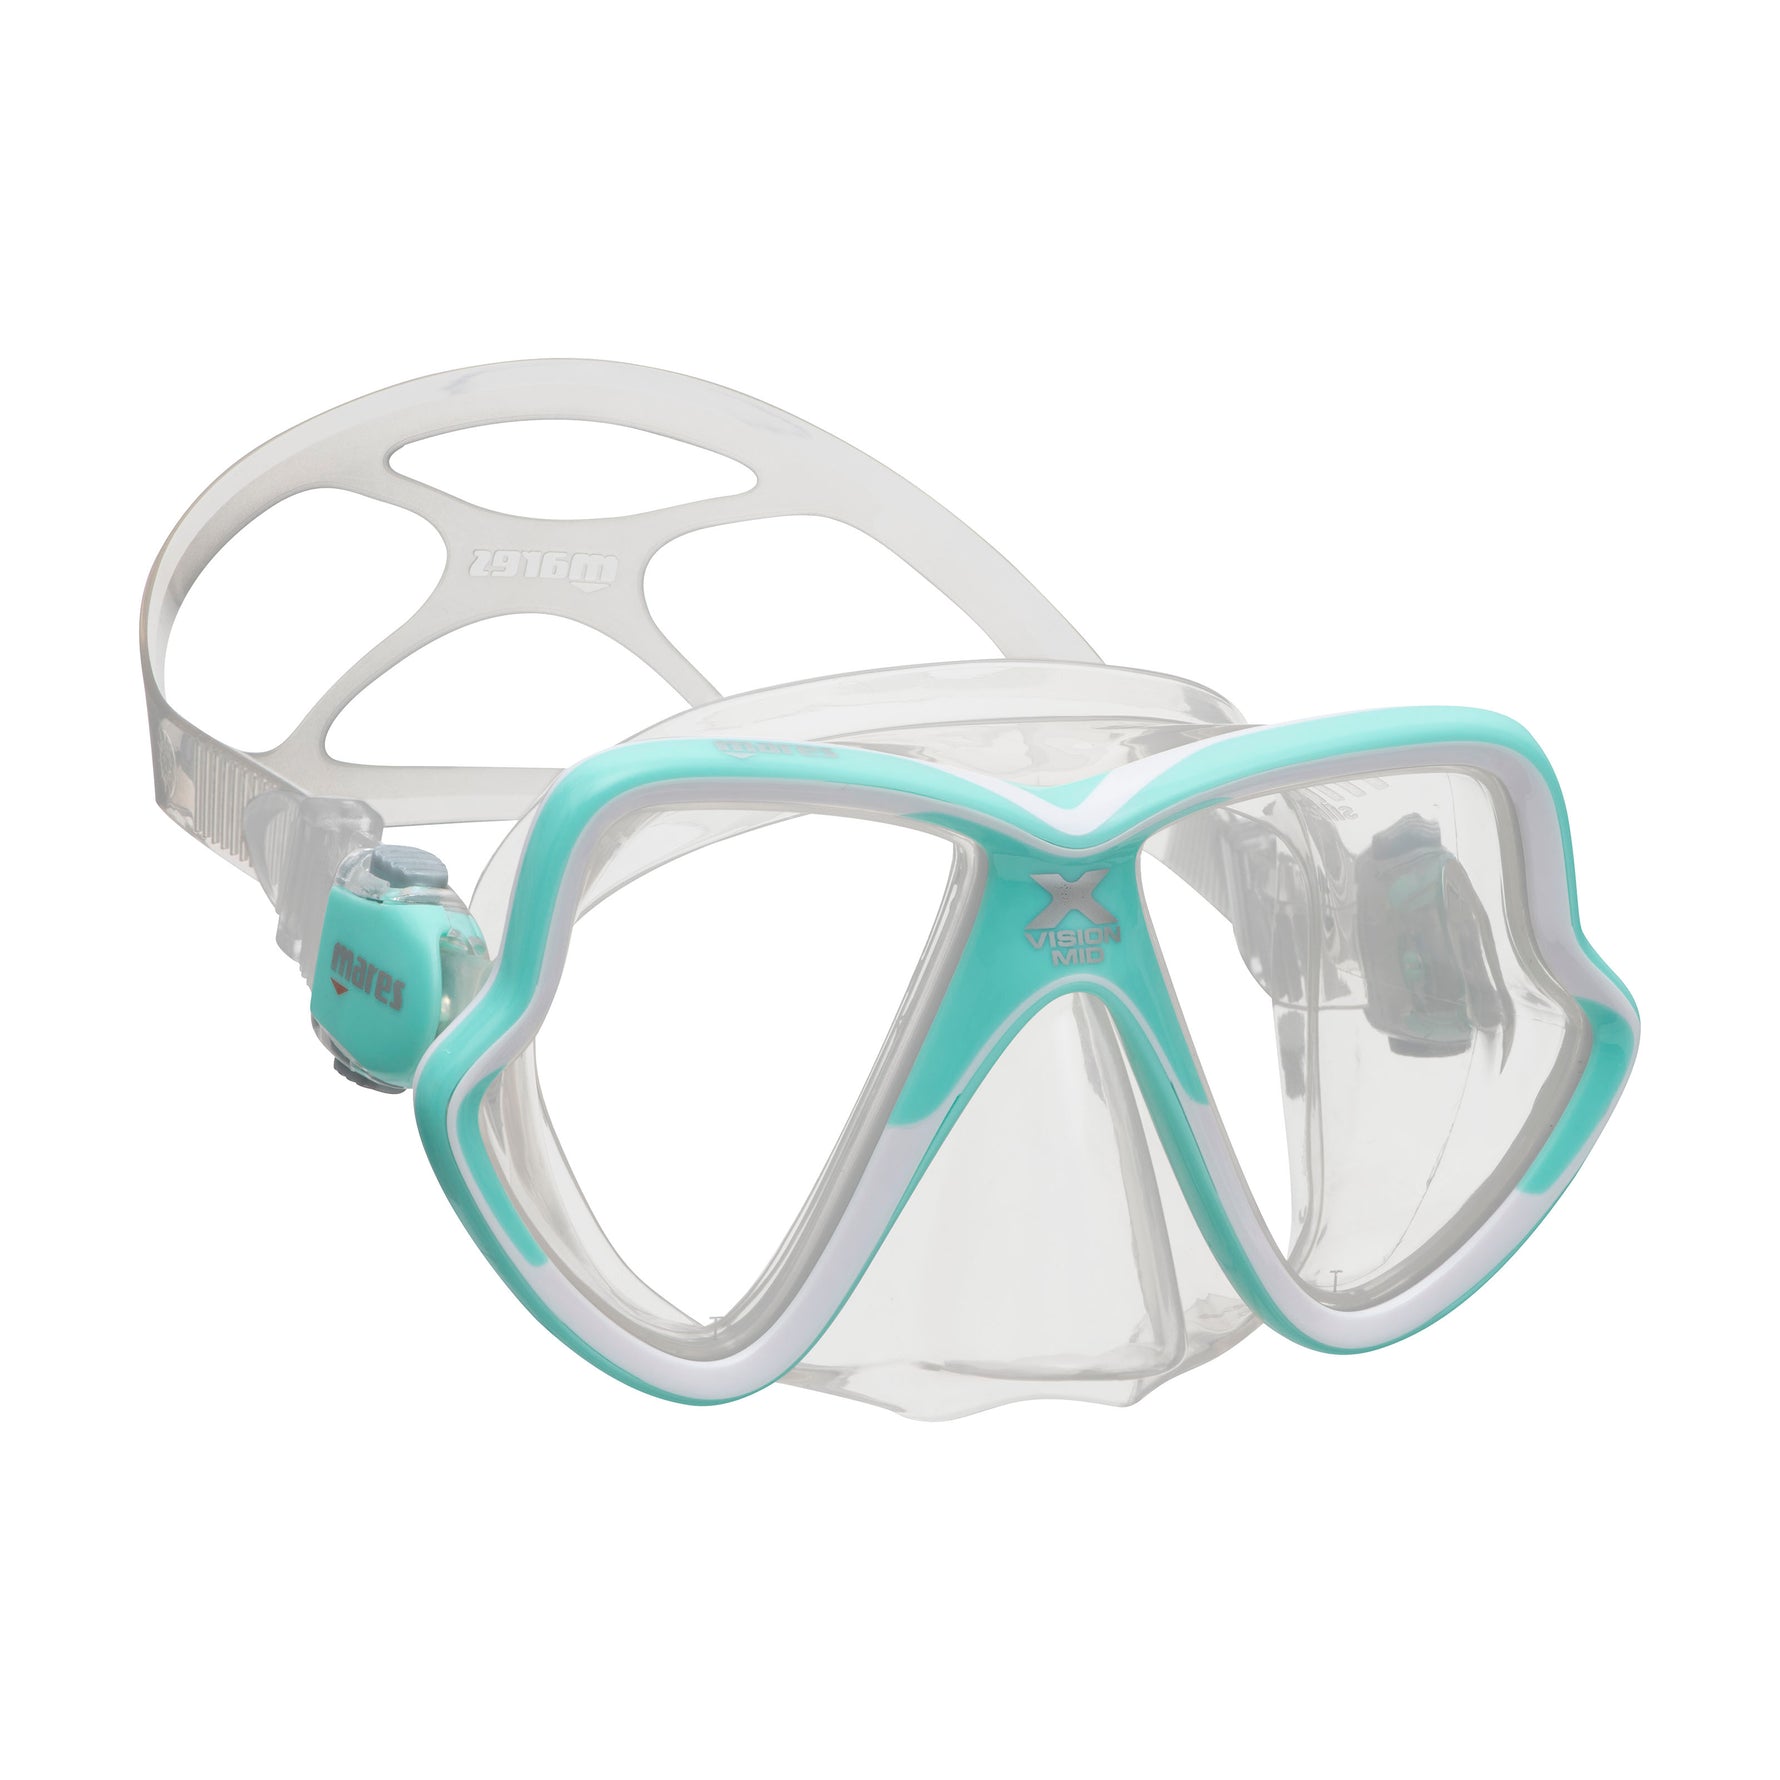 limited edition, aqua x vision silicone mask